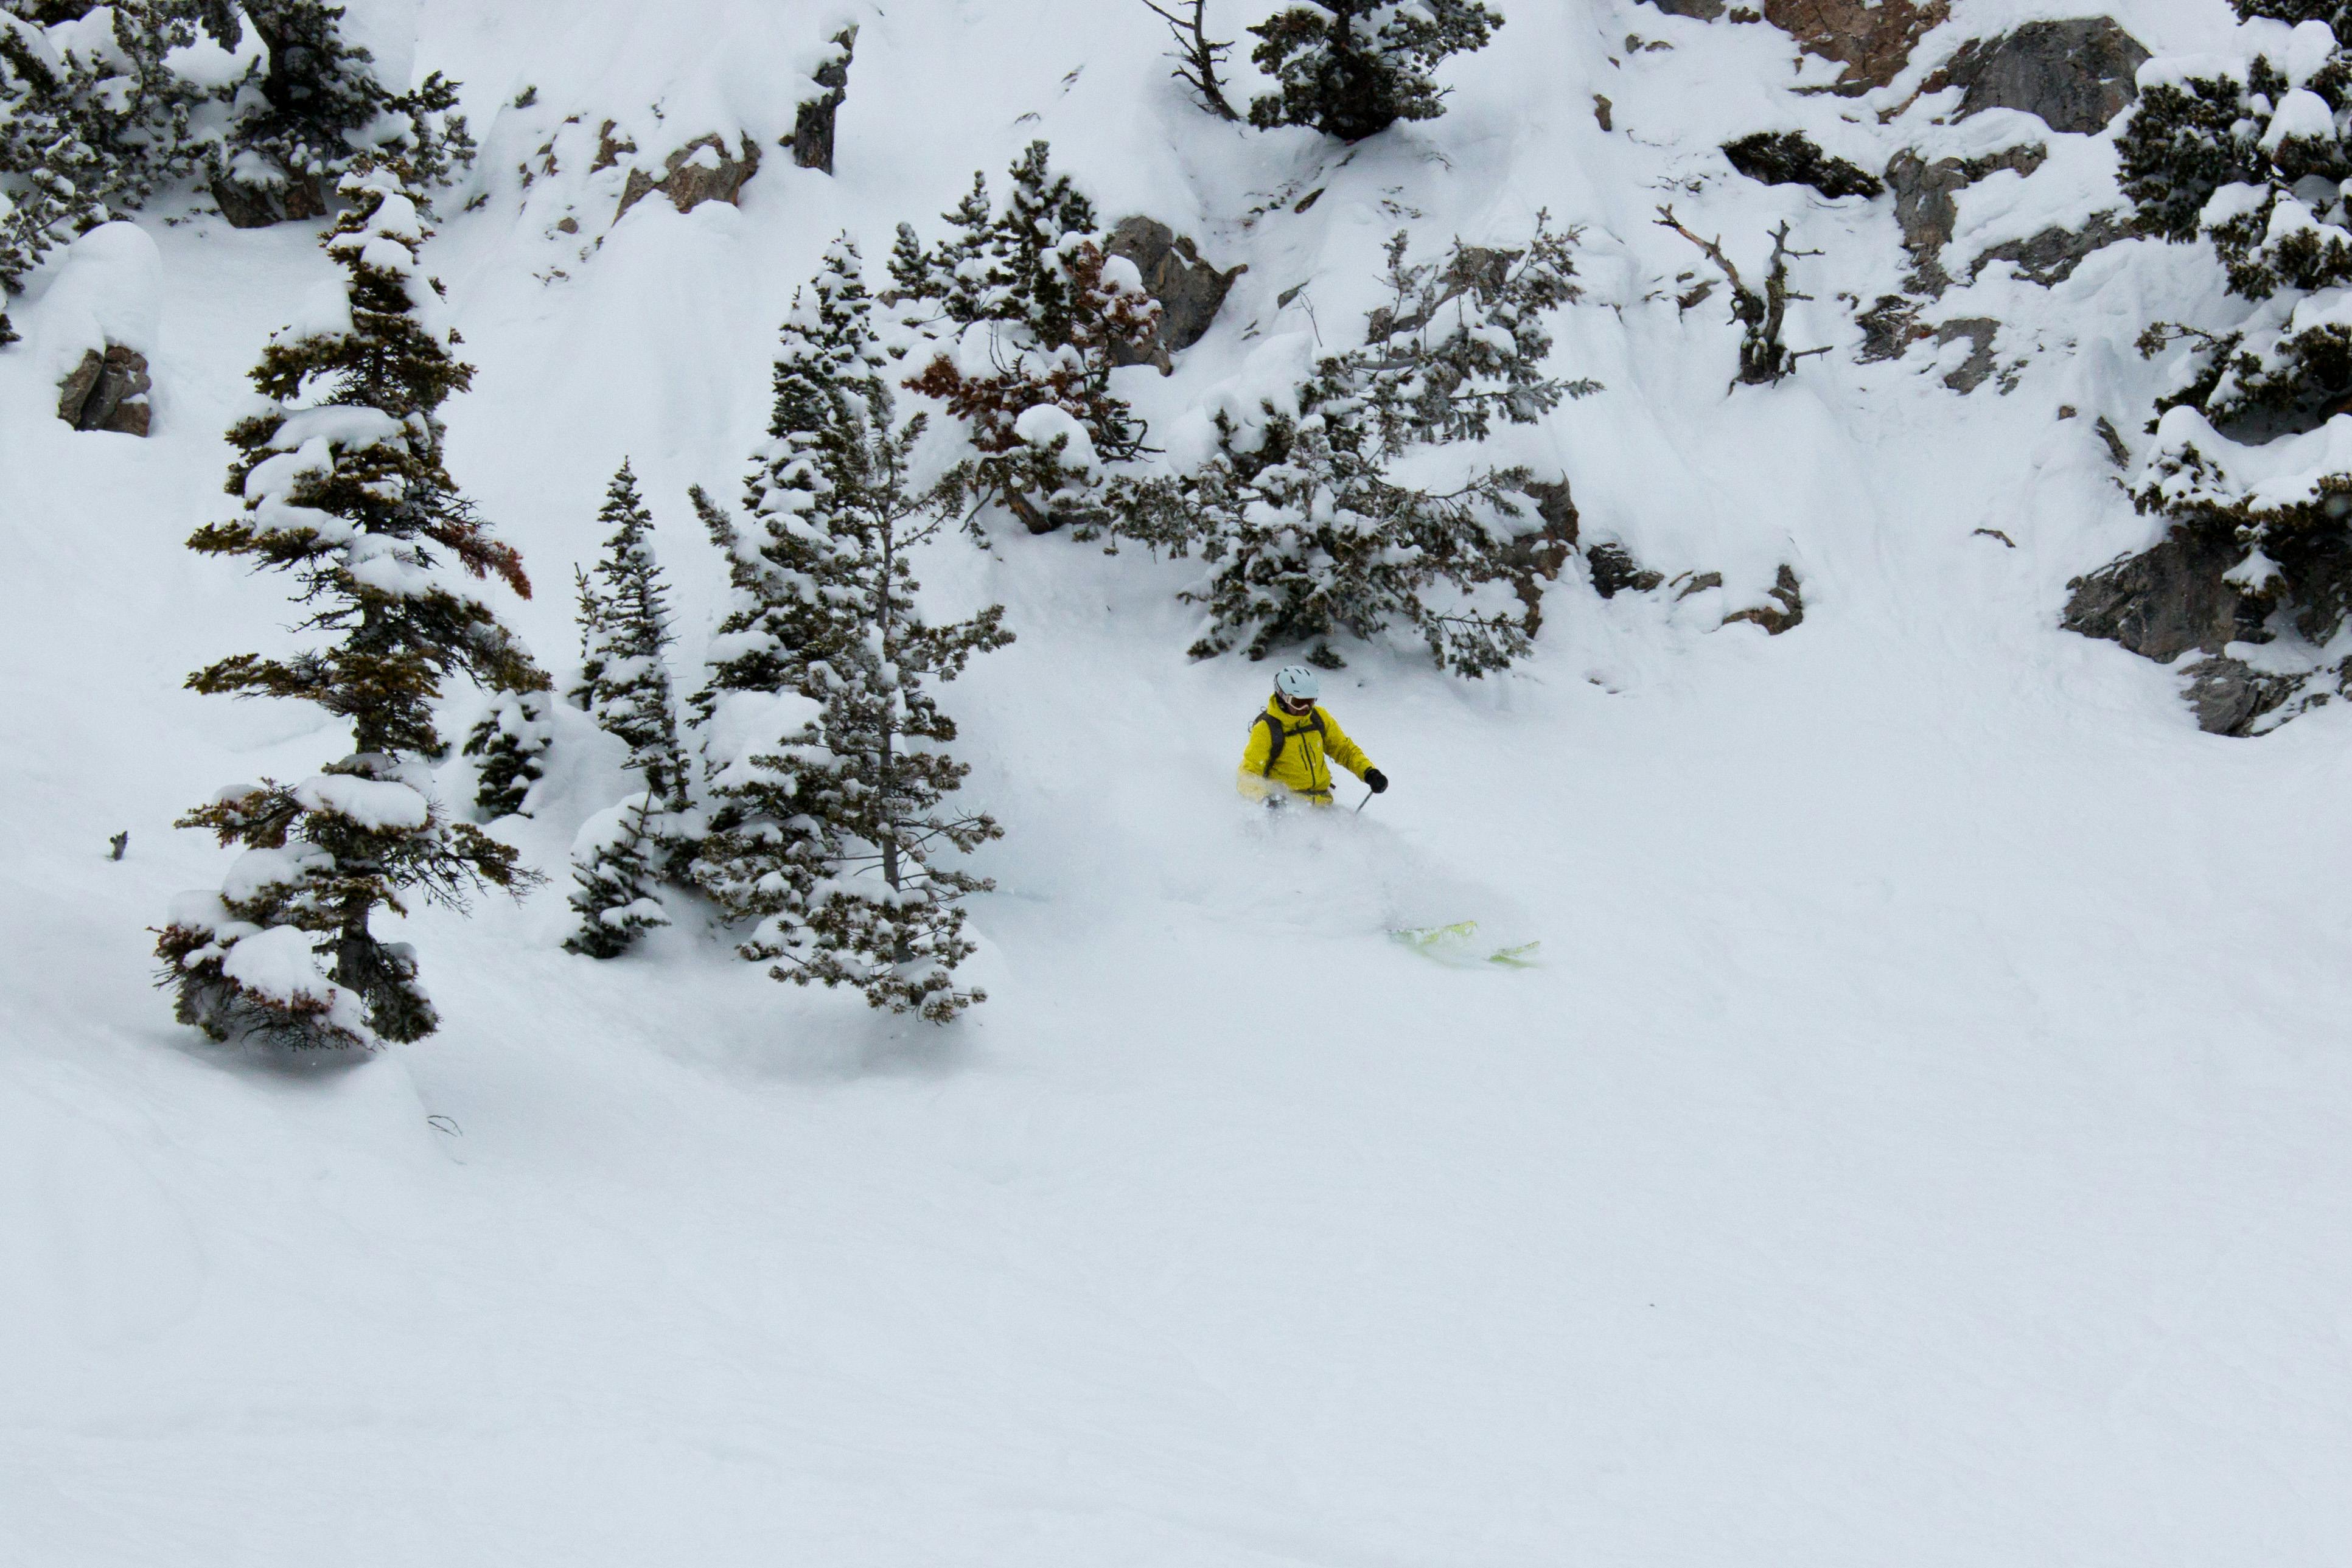 A skier in a yellow jacket makes their way down a mountain through powder